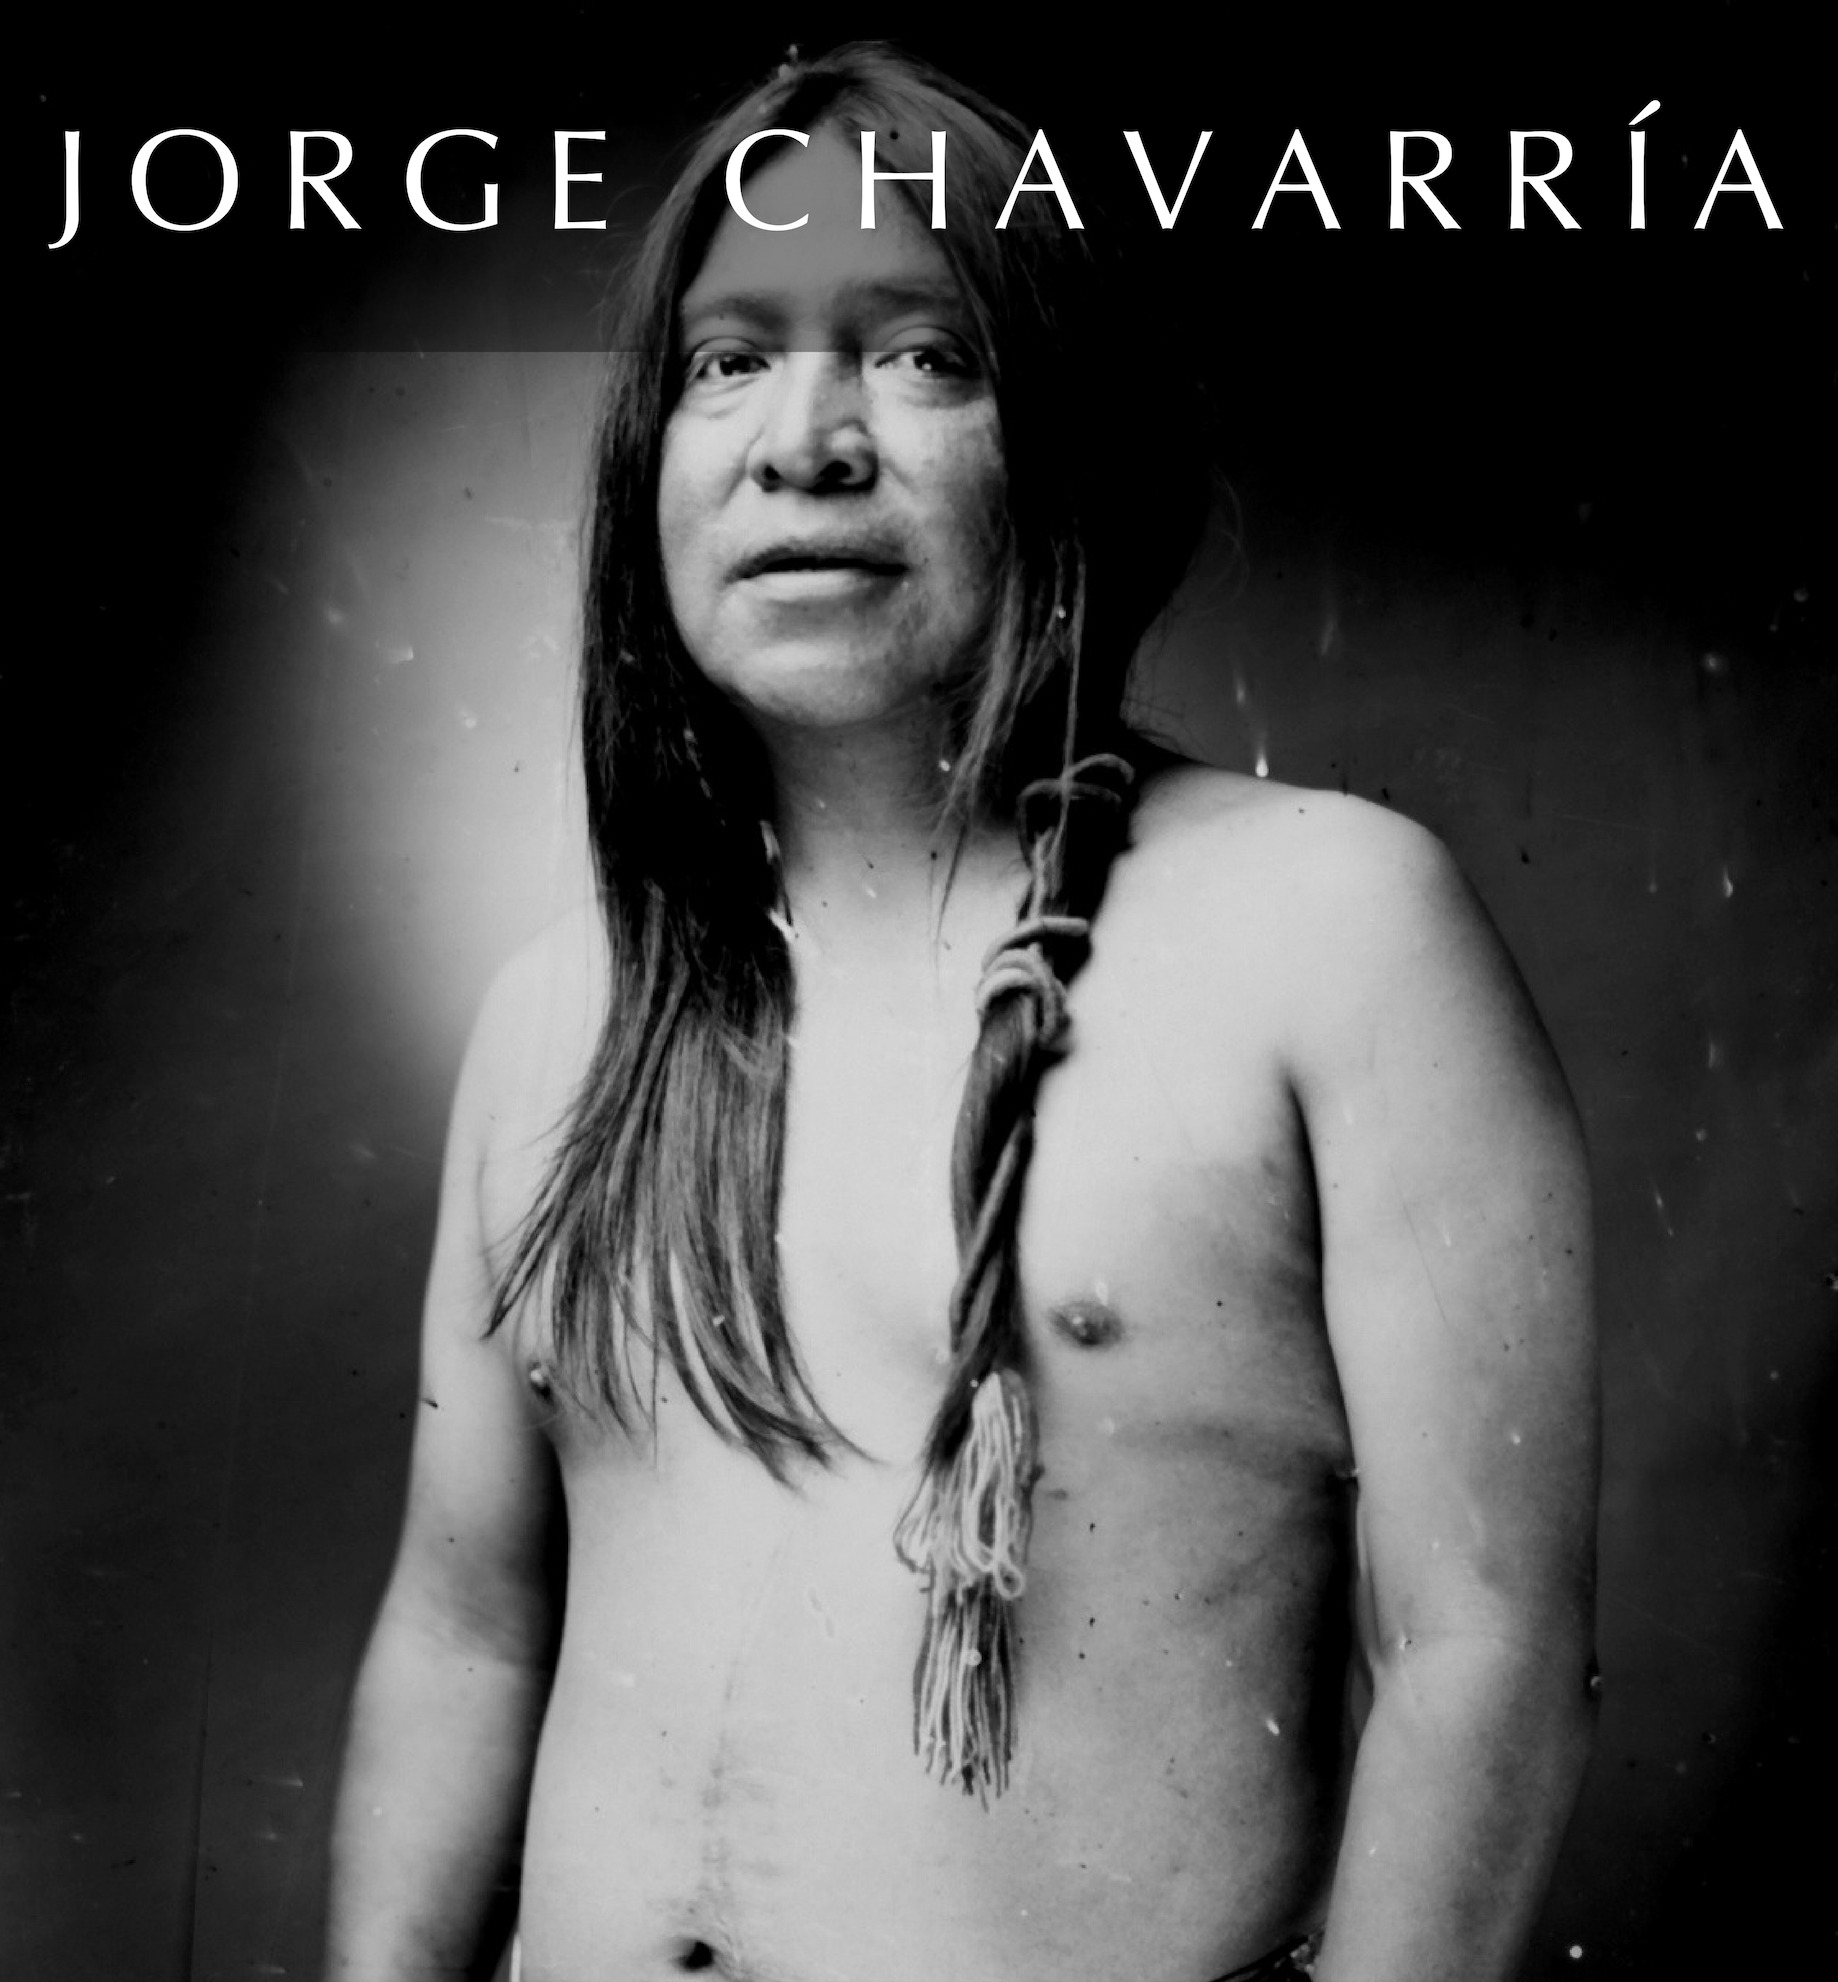 Jorge Chavarria